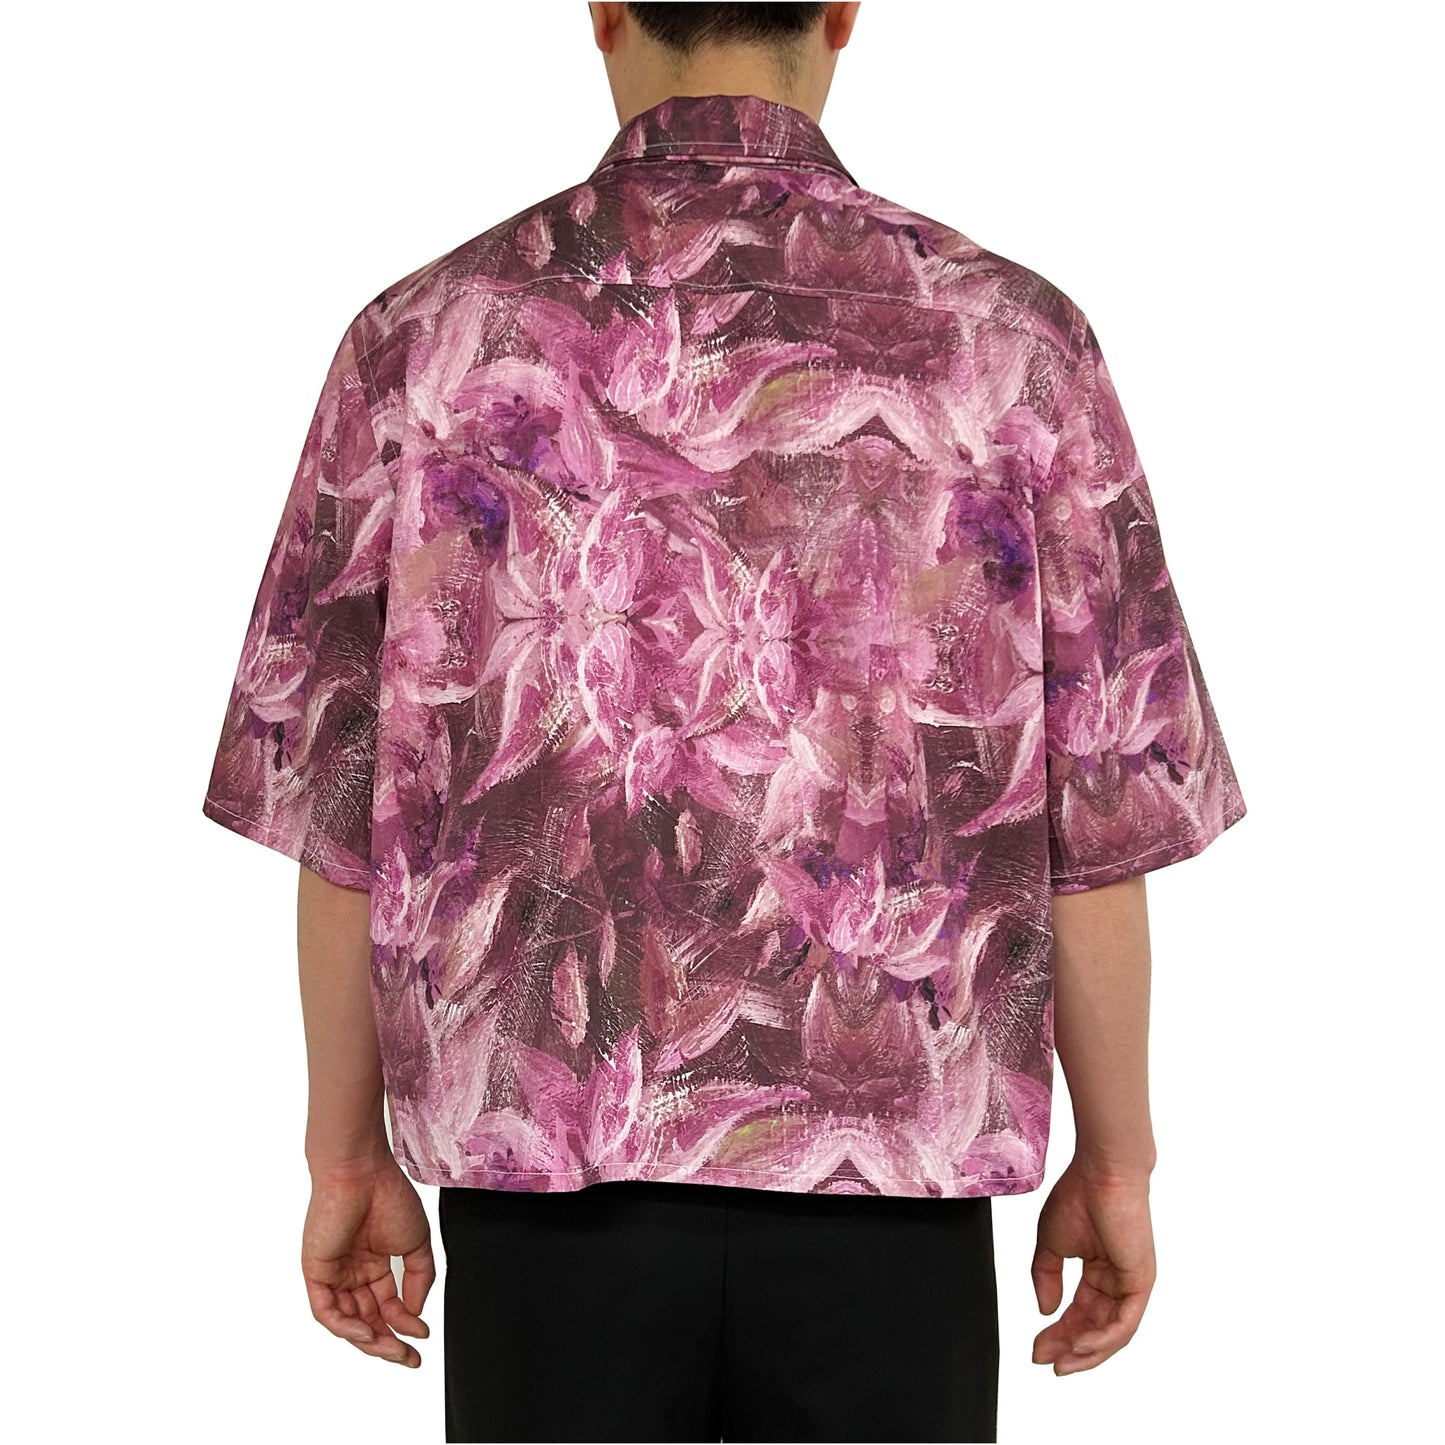 The Gladiolus Shirt